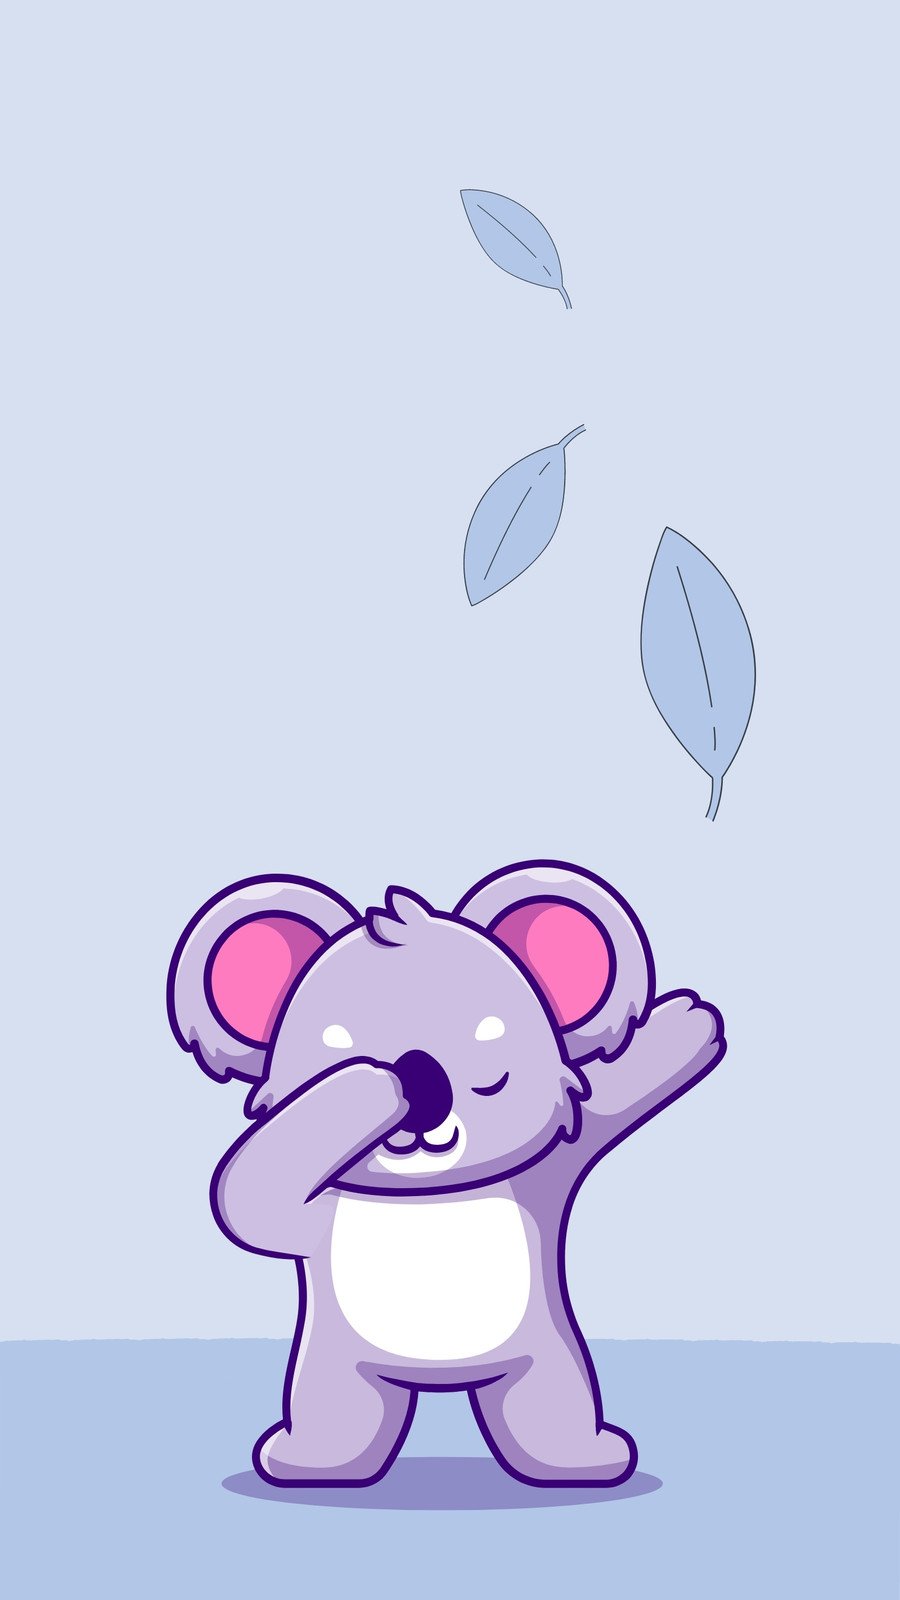 Free: minimalistic cartoon version of a cute koala 